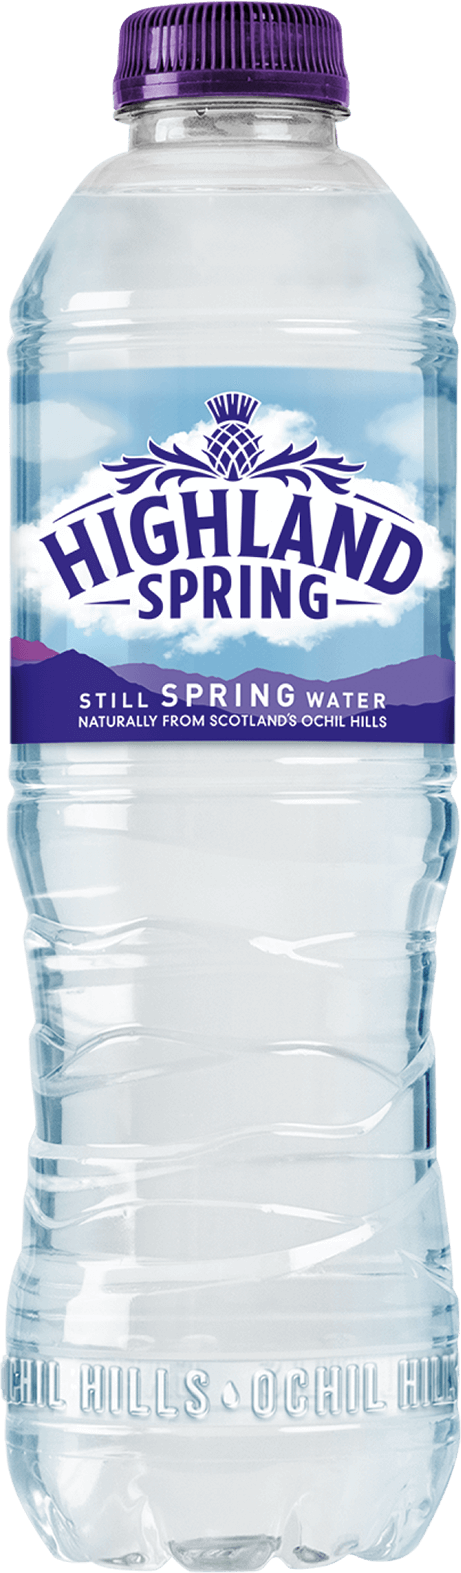 Highland Spring Still Water Pack of 500ml